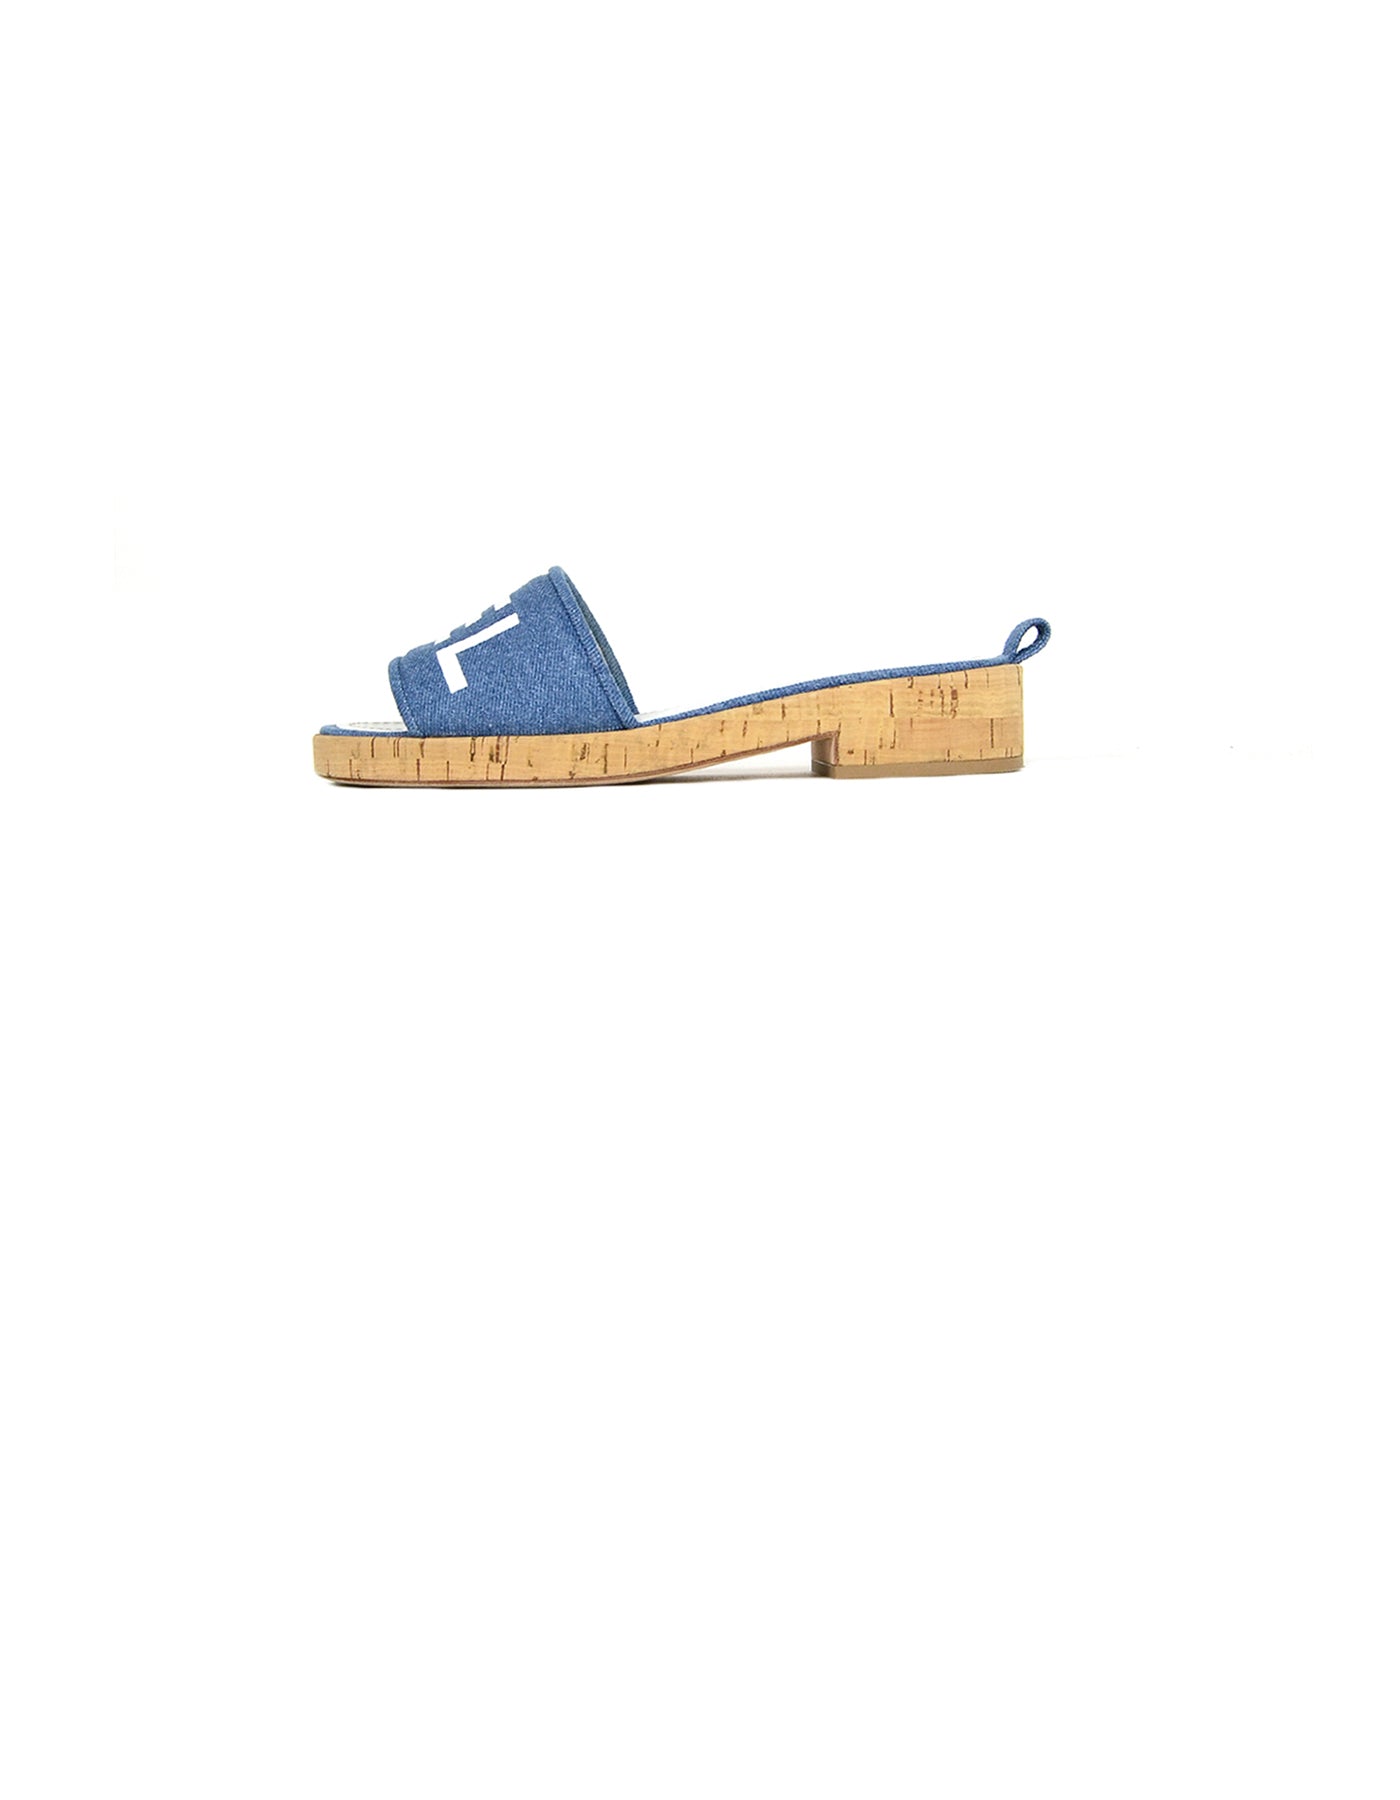 Chanel 2019 Blue Denim Logo Sandal Mules sz 39